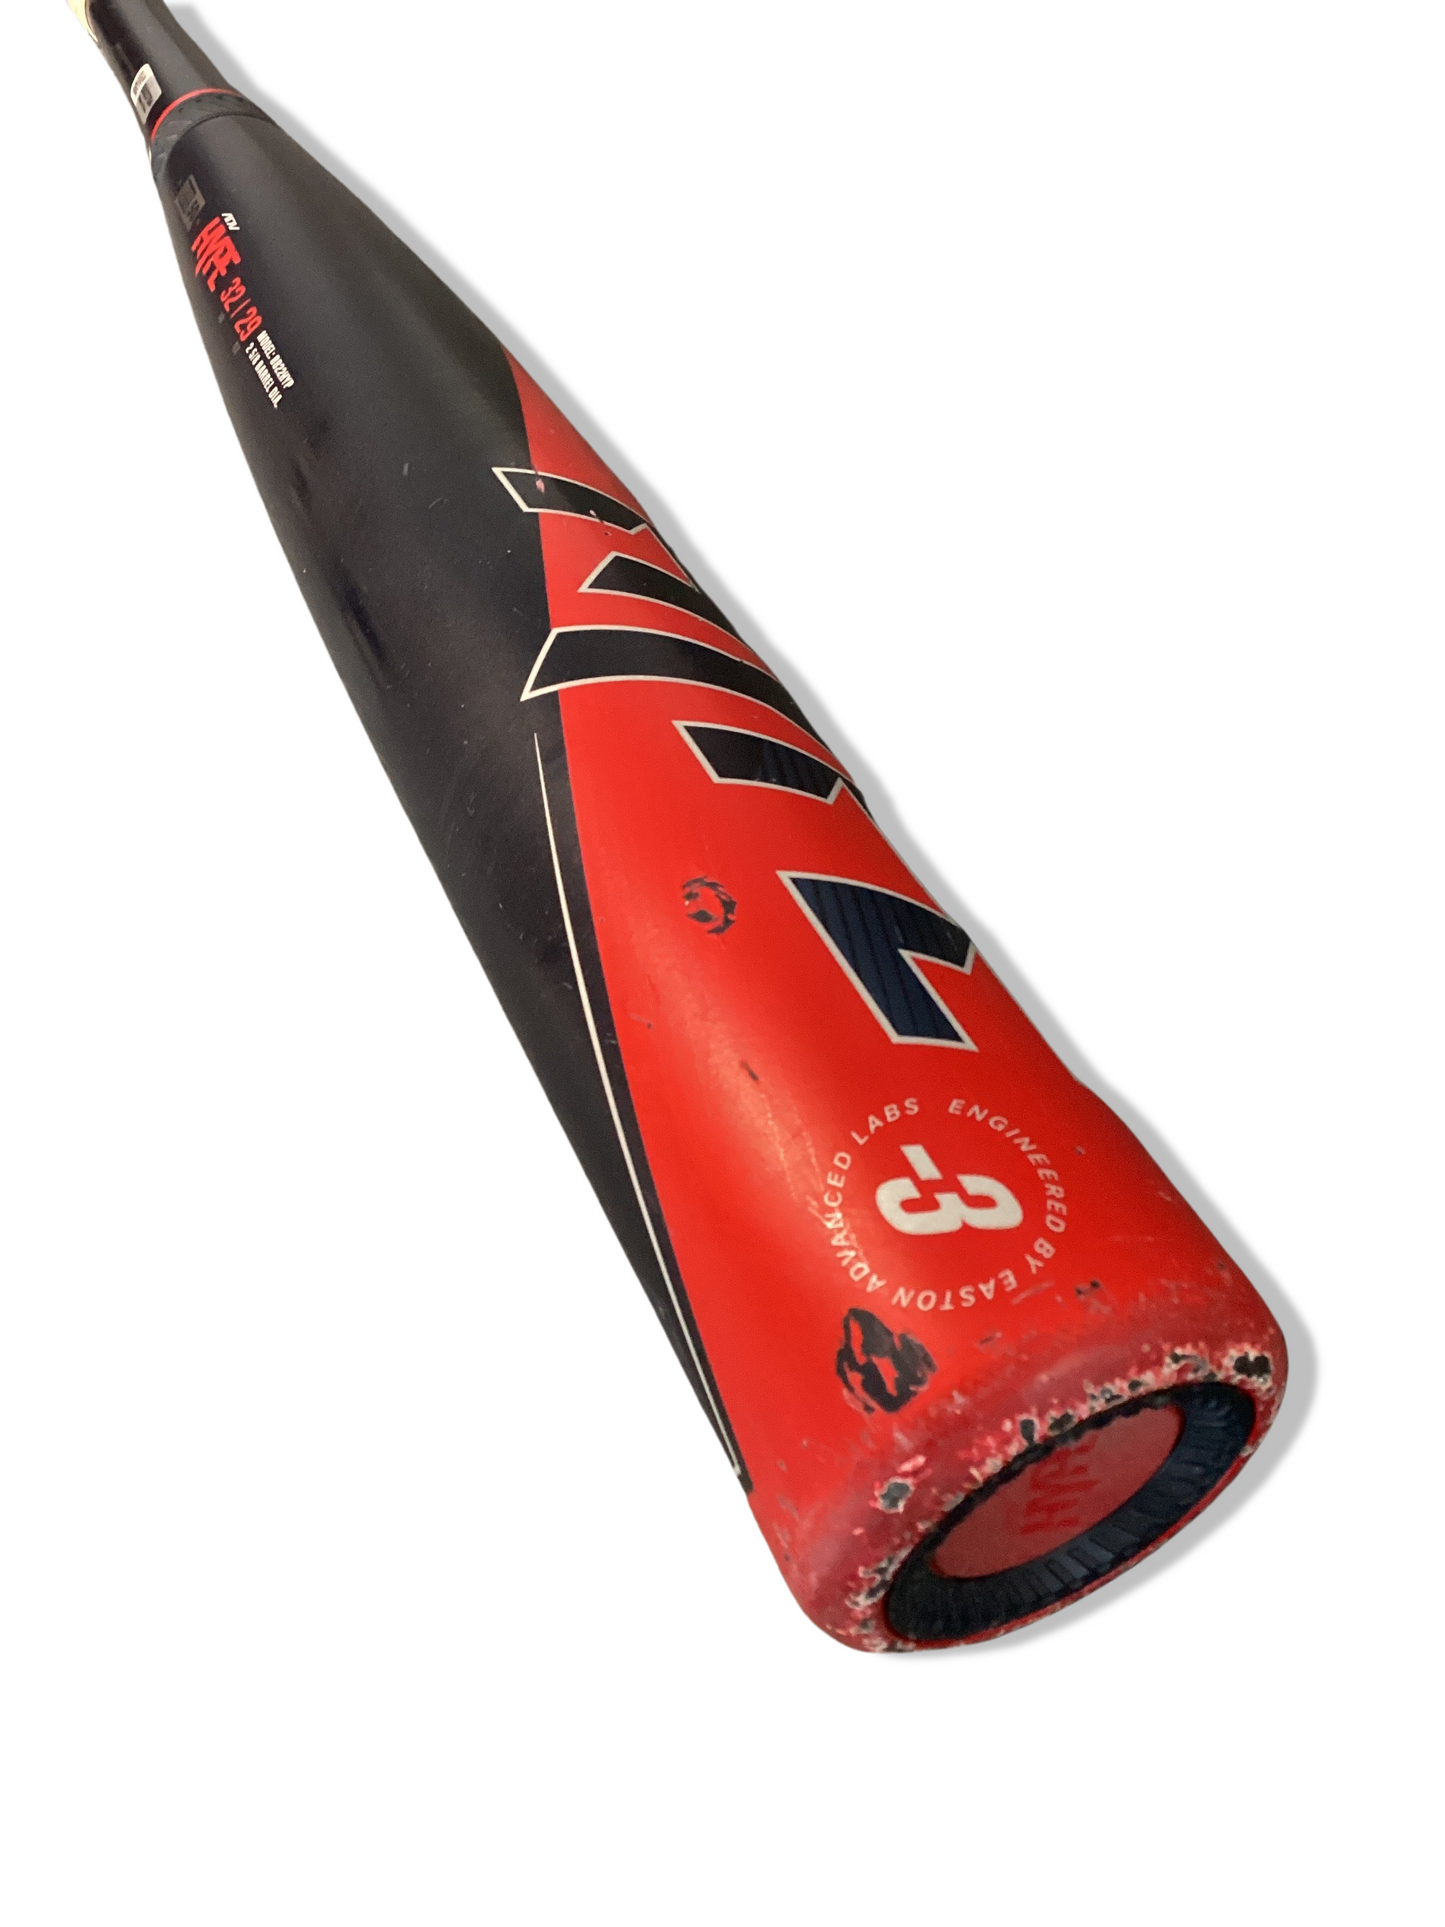 2022 Easton ADV HYPE BBCOR (-3) 32" 29oz Baseball Bat - Used